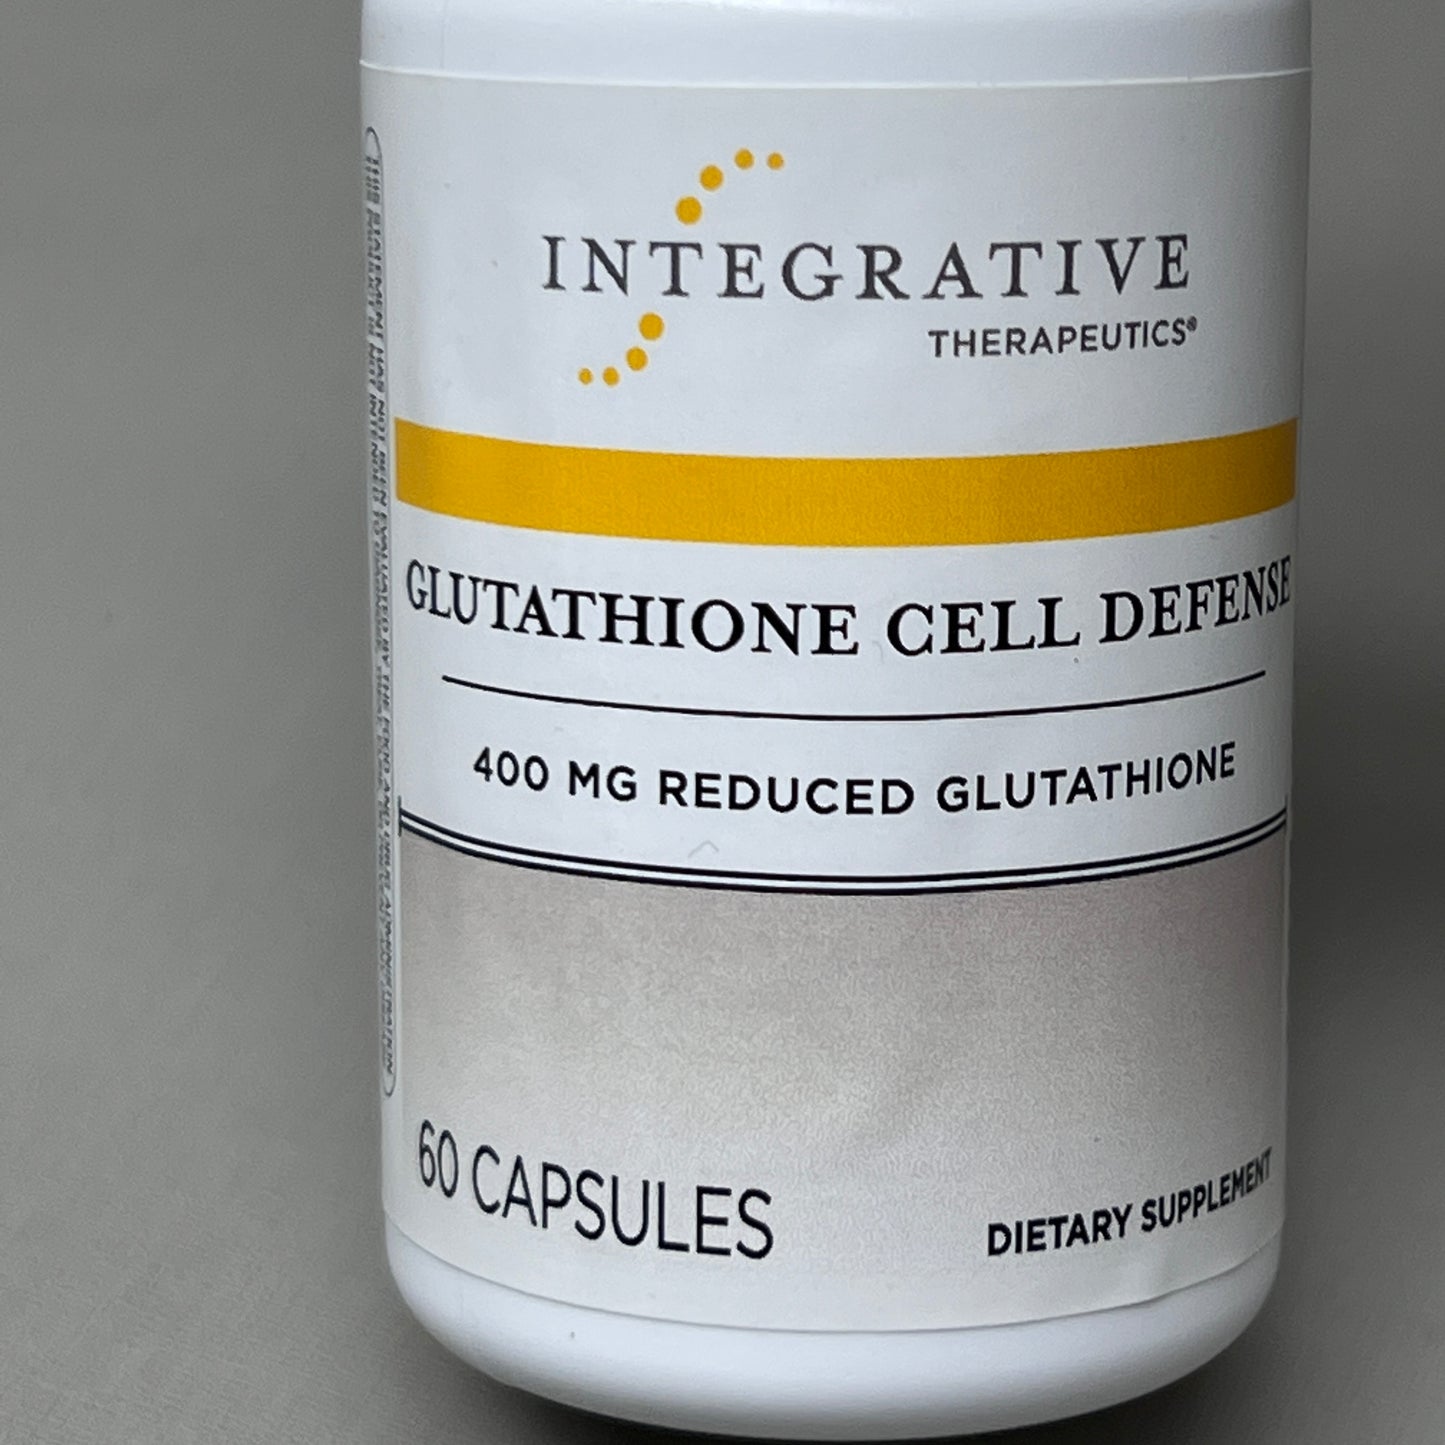 INTEGRATIVE THERAPEUTICS Glutathione Cell Defense Supplement 60 capsules 07/24 (New)